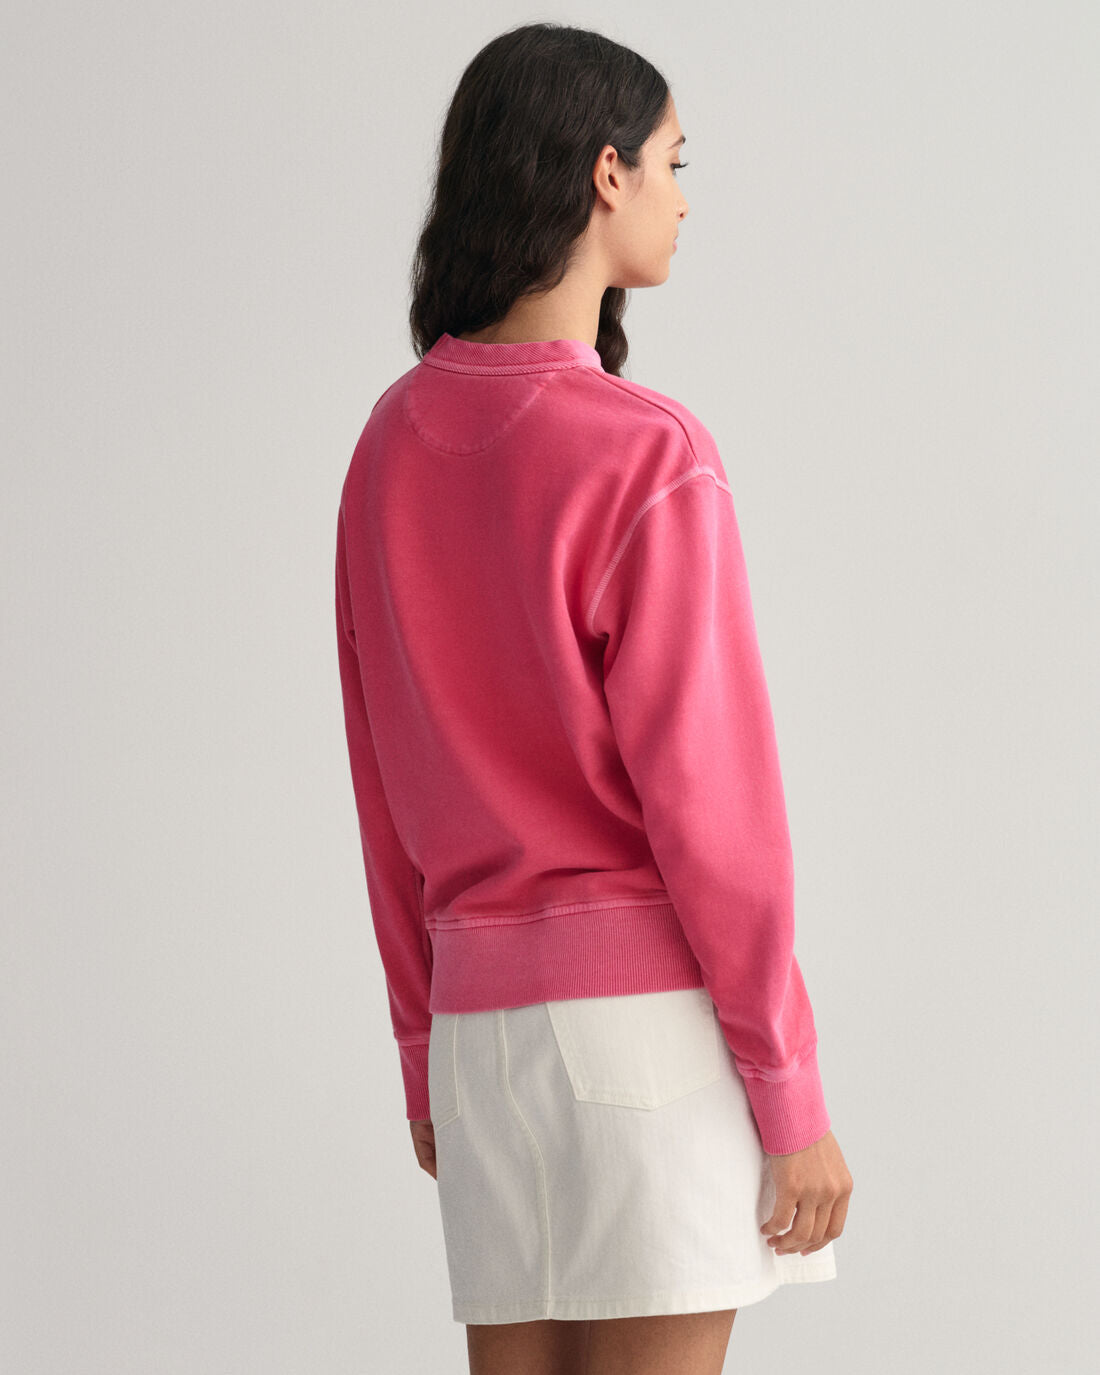 Gant - Sunfaded Sweatshirt